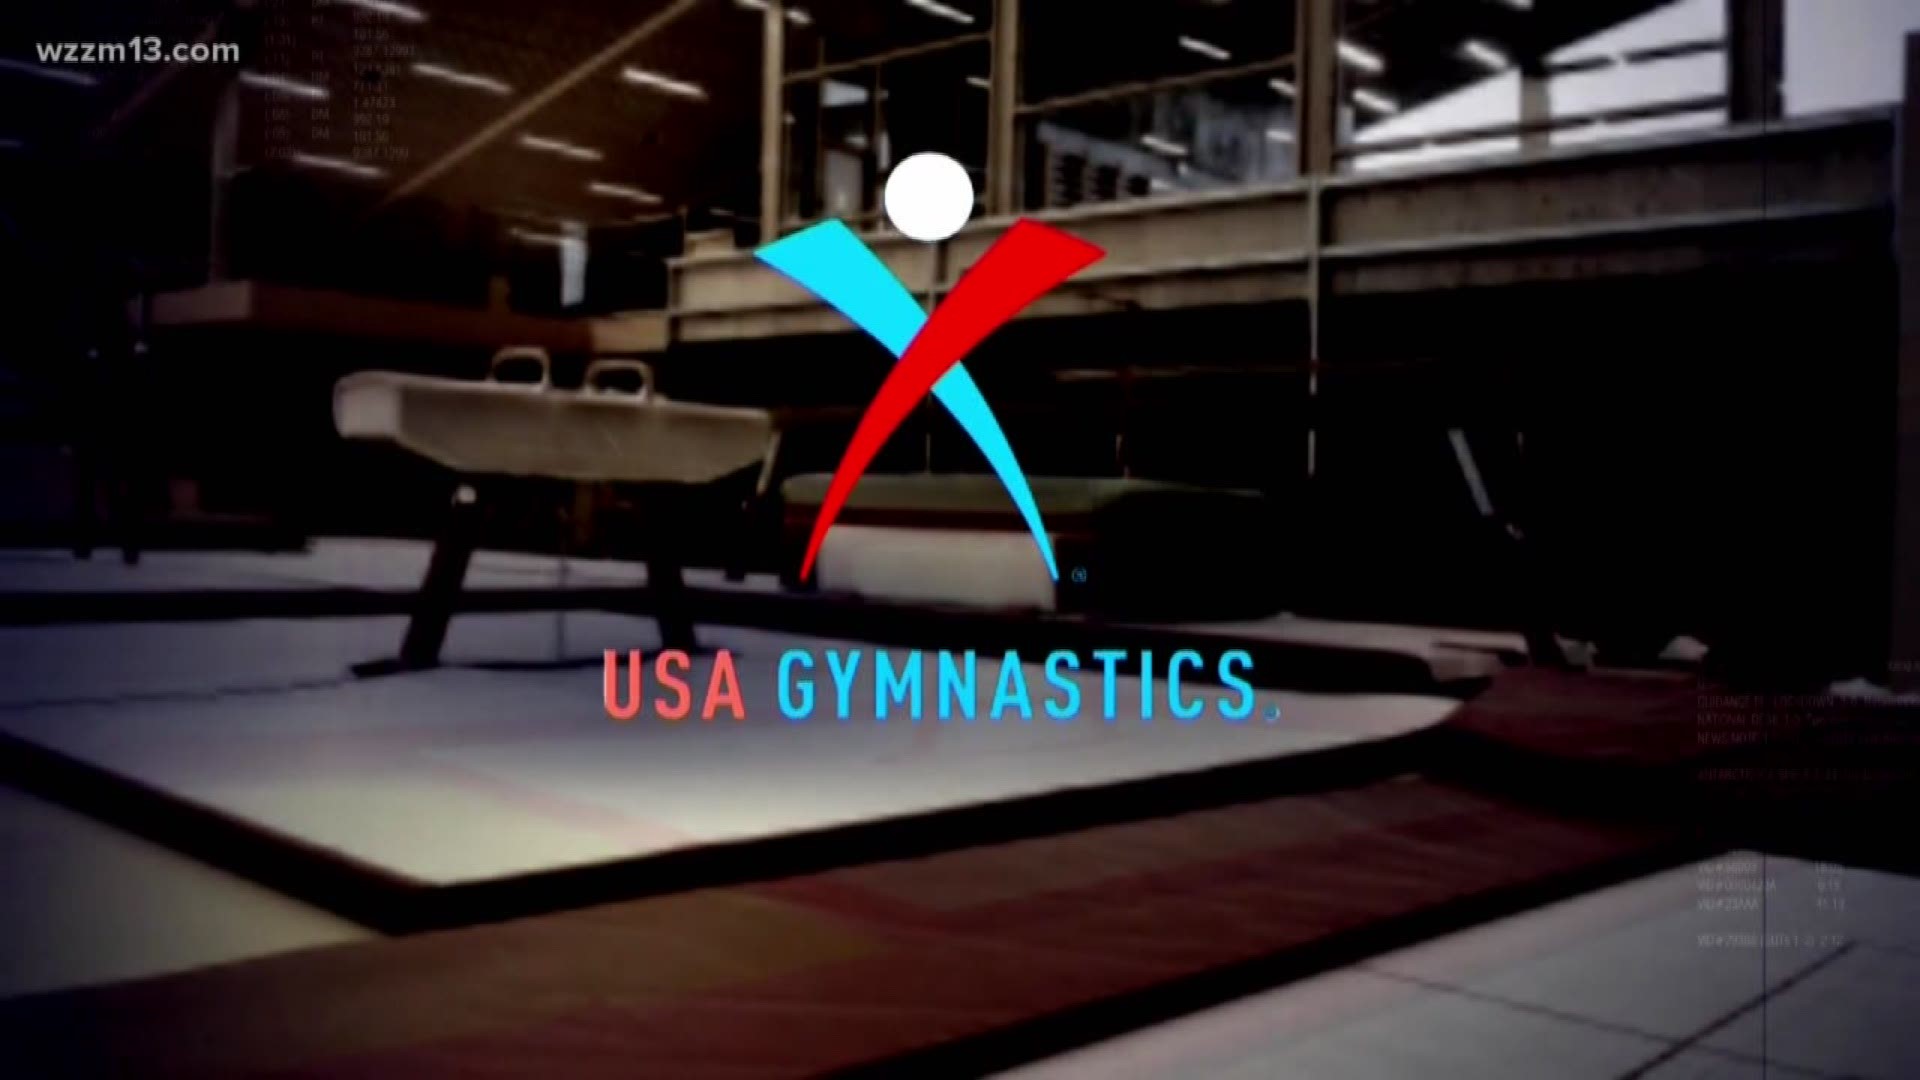 USA Gymnastics Files for Bankruptcy